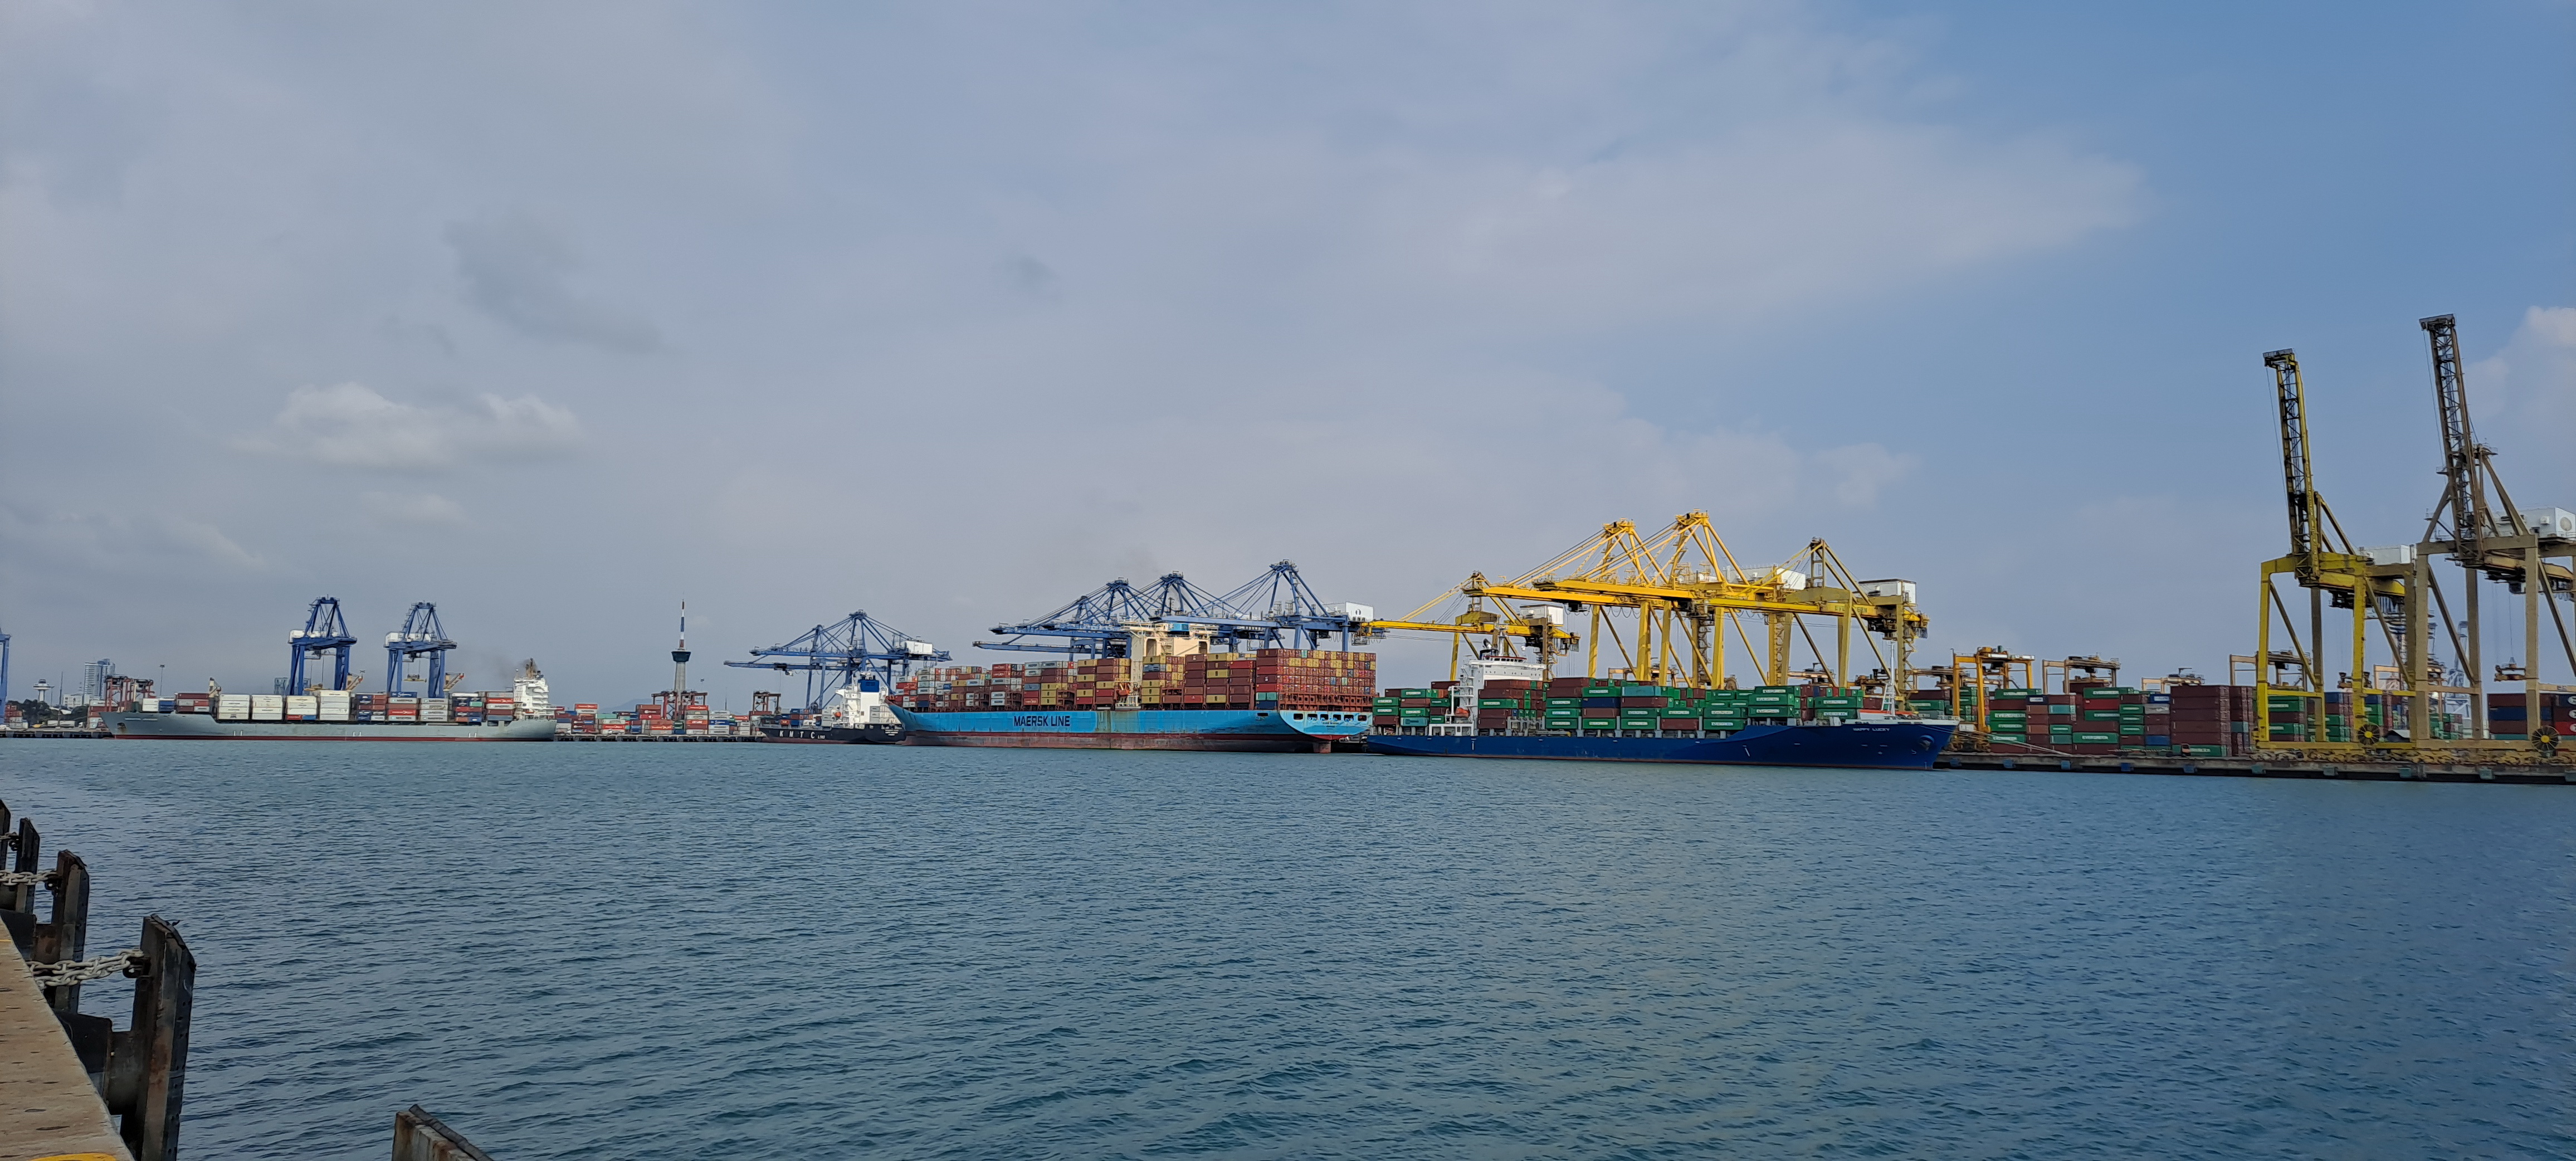 <p>Ships docked in Laem Chabang Port</p>